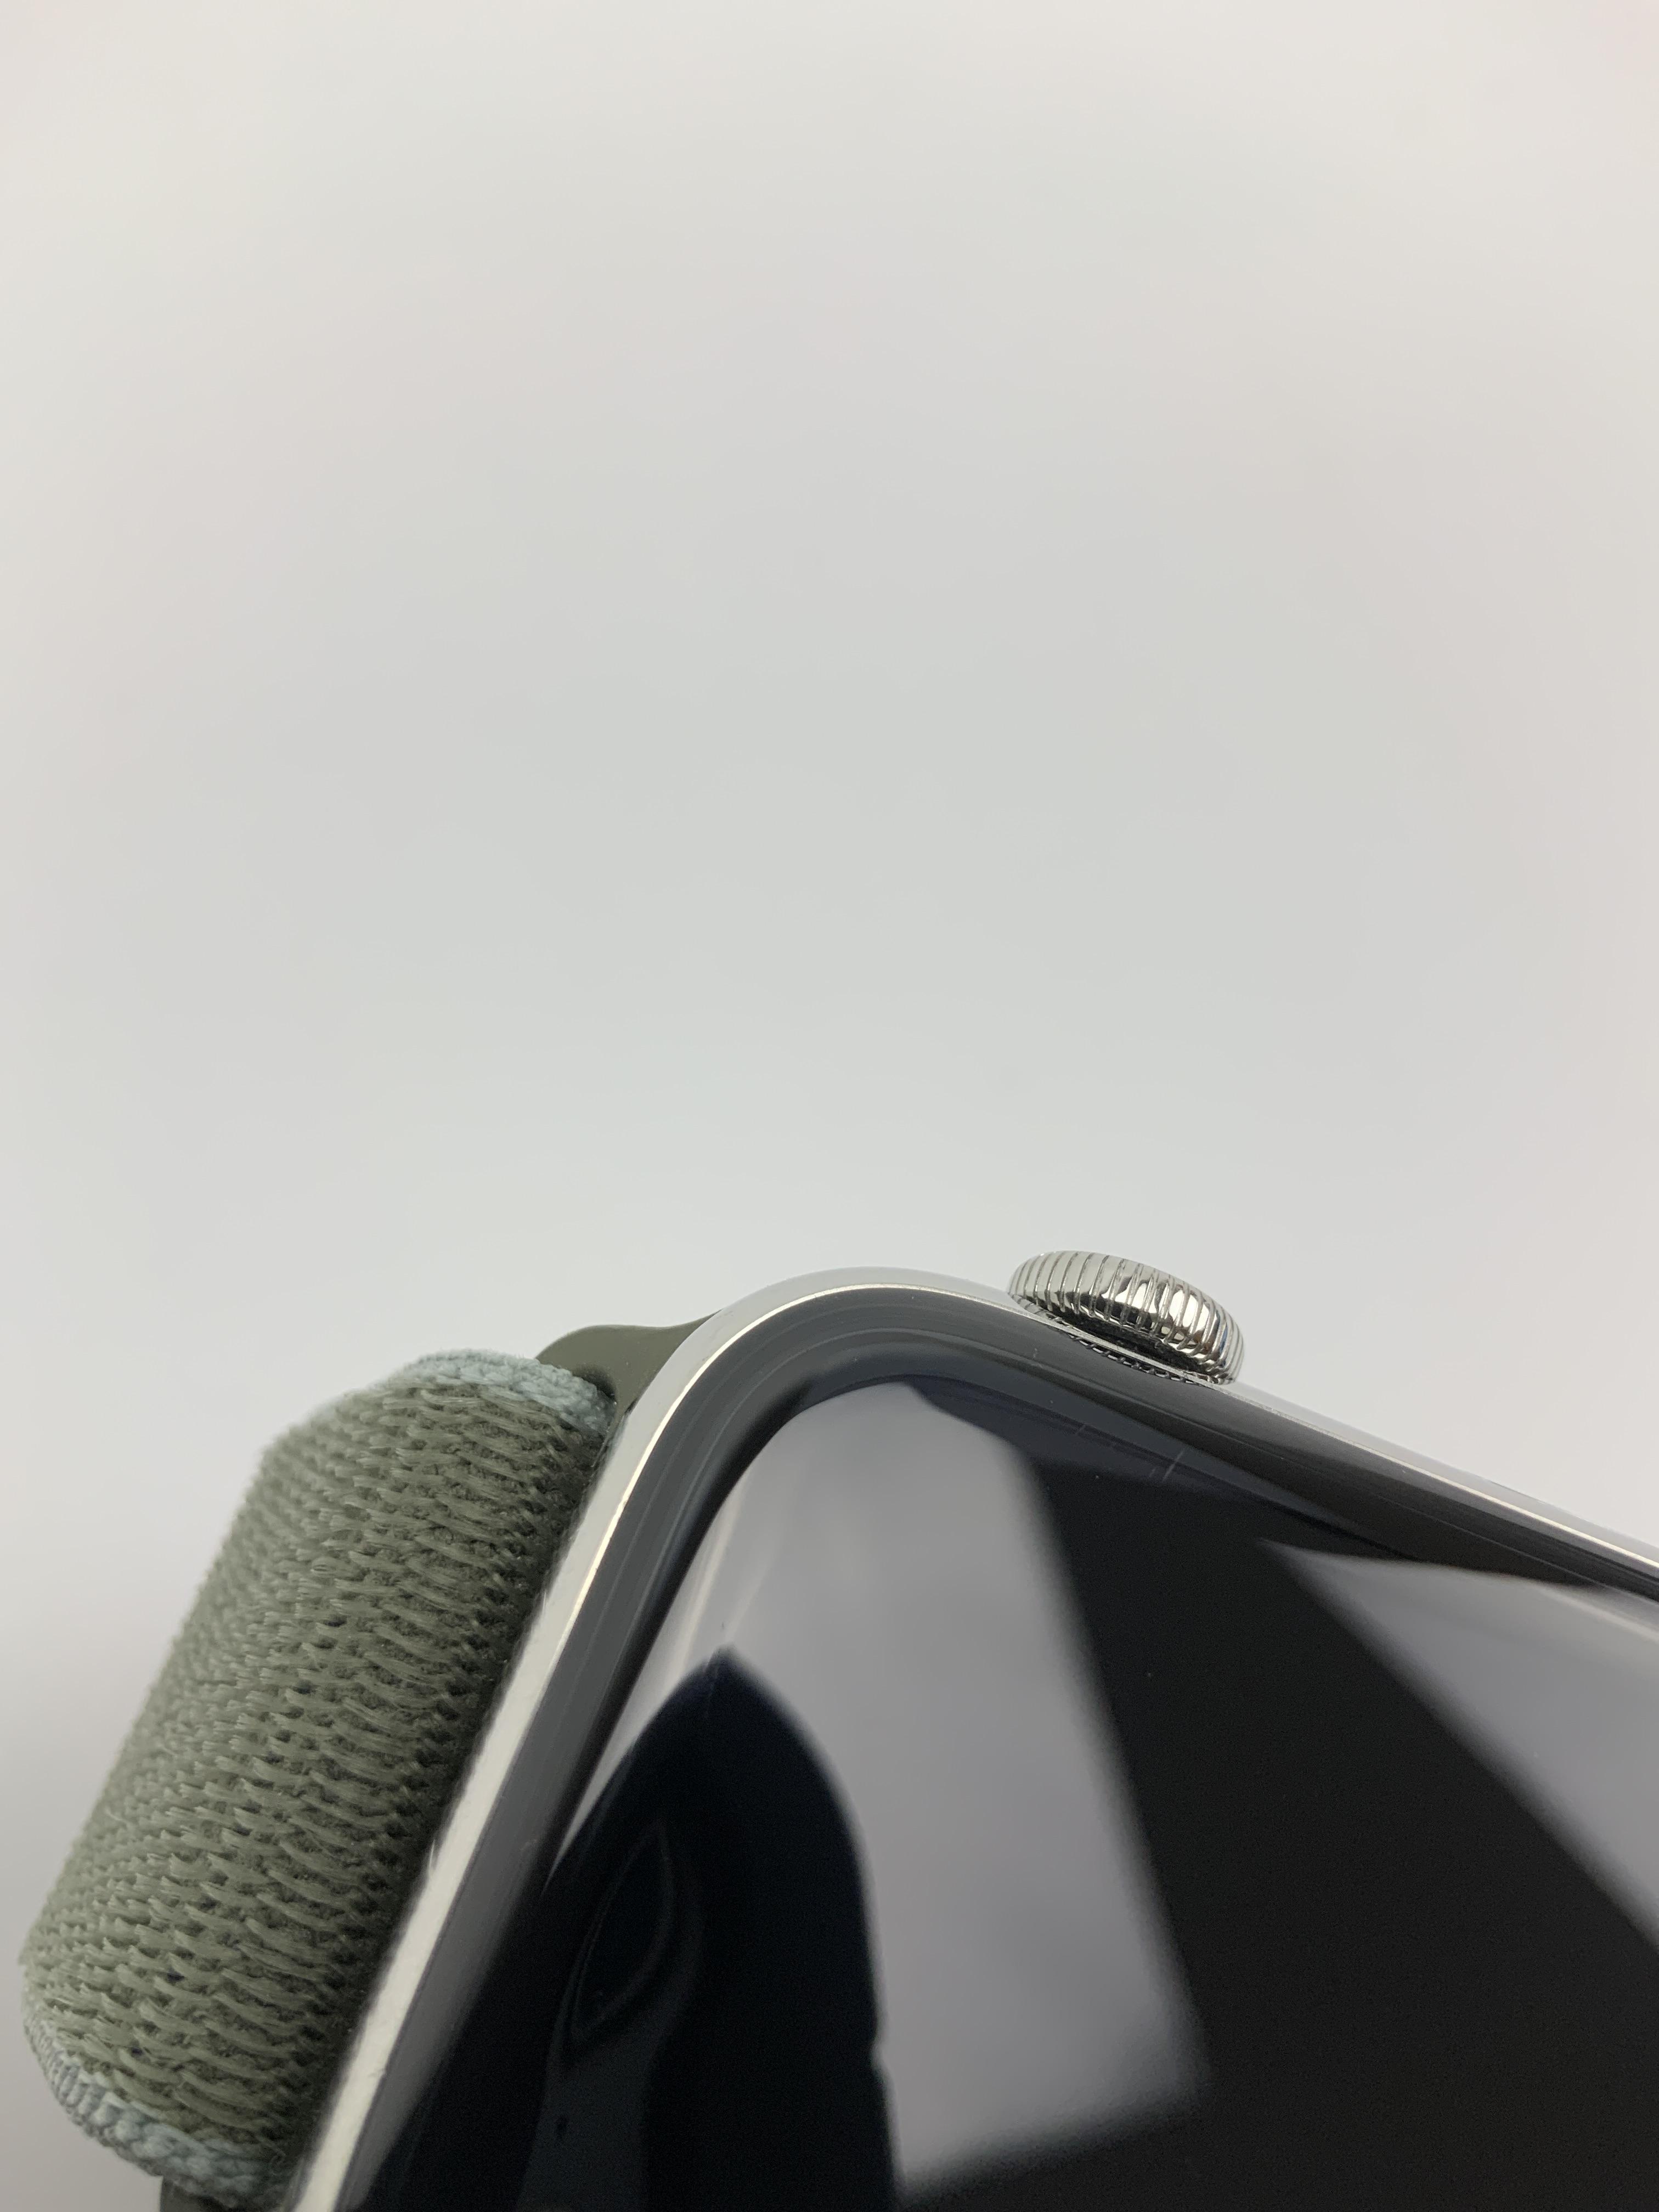 Watch Series 5 Steel Cellular (44mm), Silver, Afbeelding 4